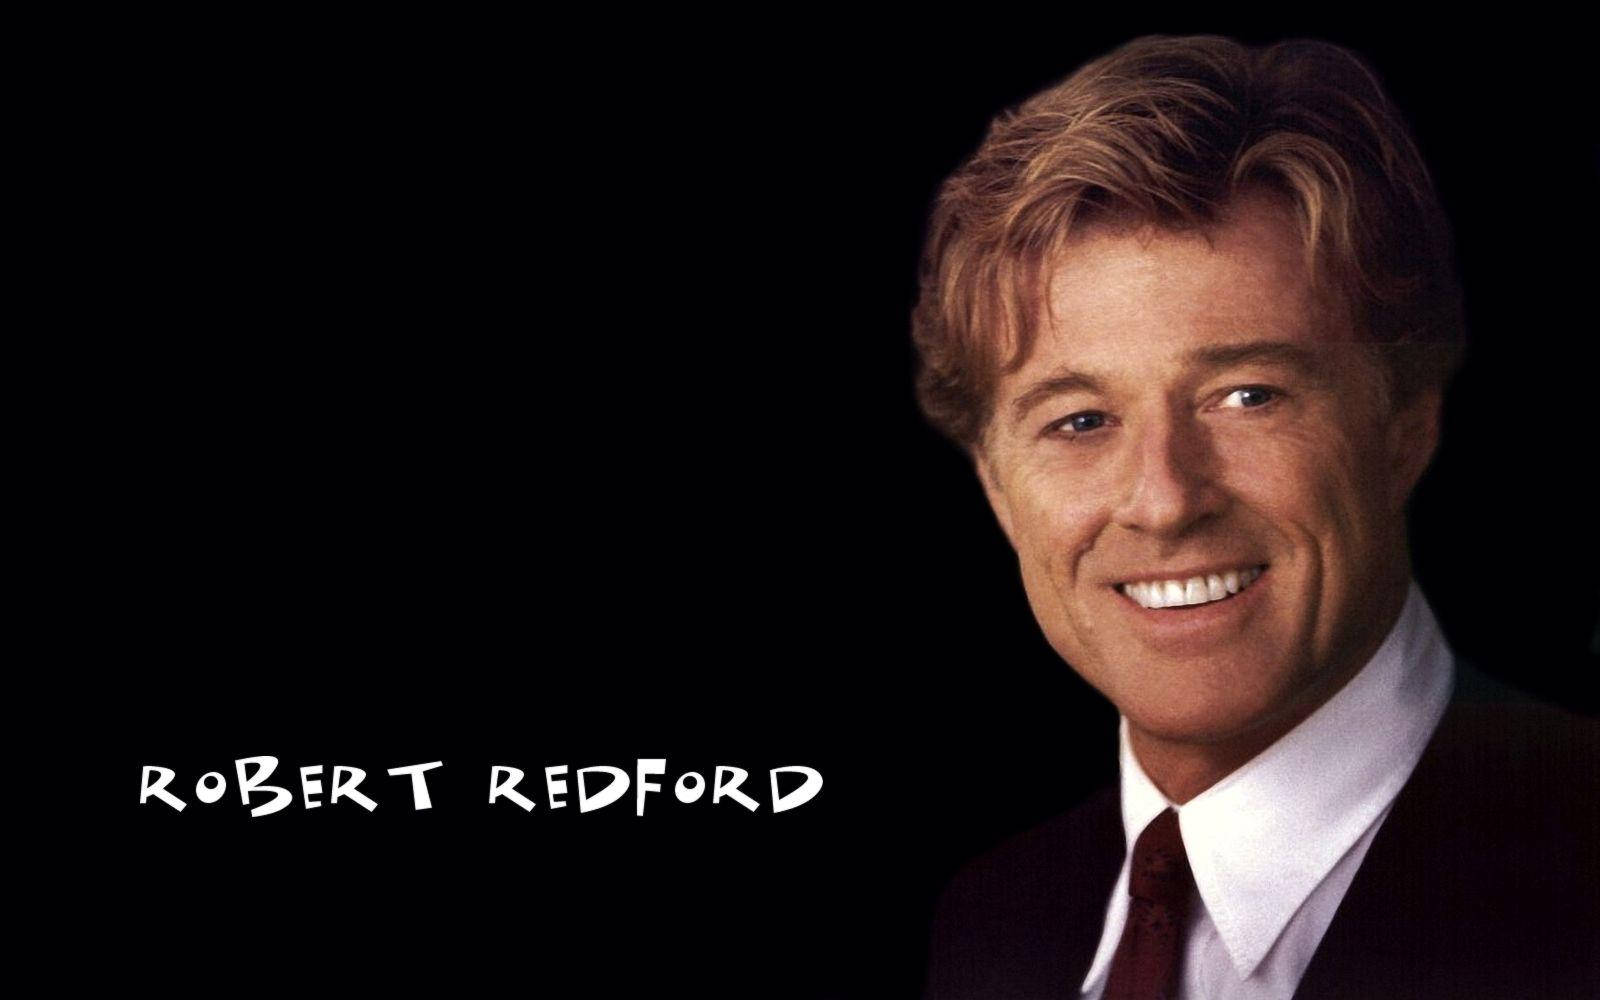 Robert Redford Name Black Background